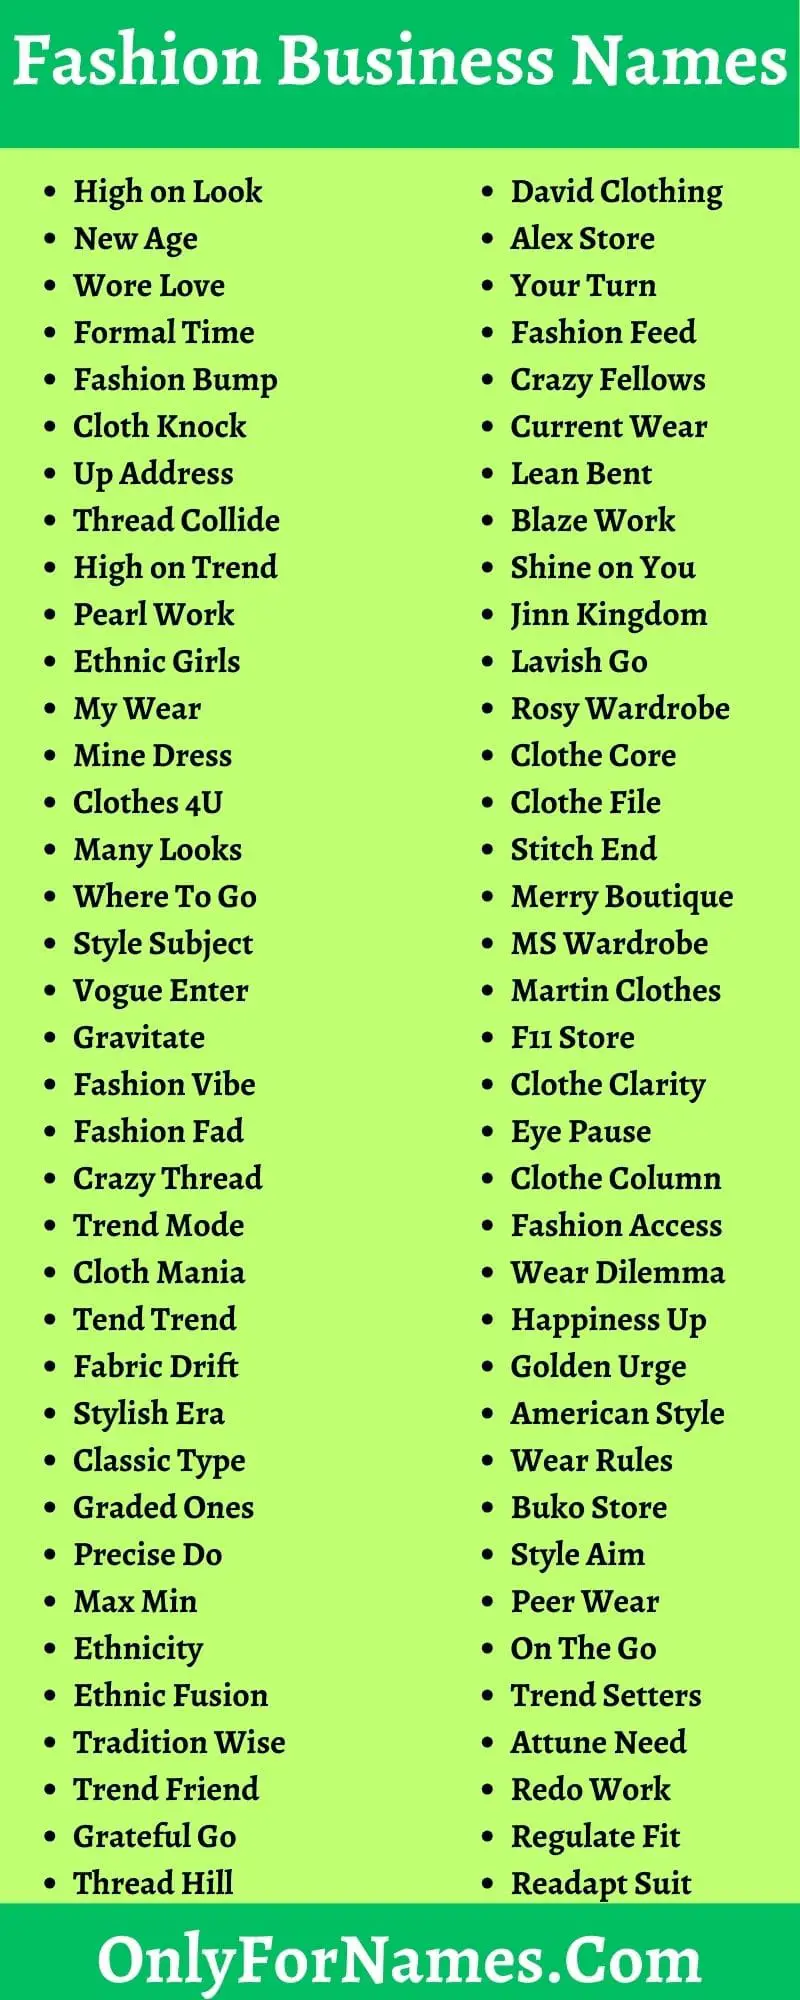 Fashion Business Names